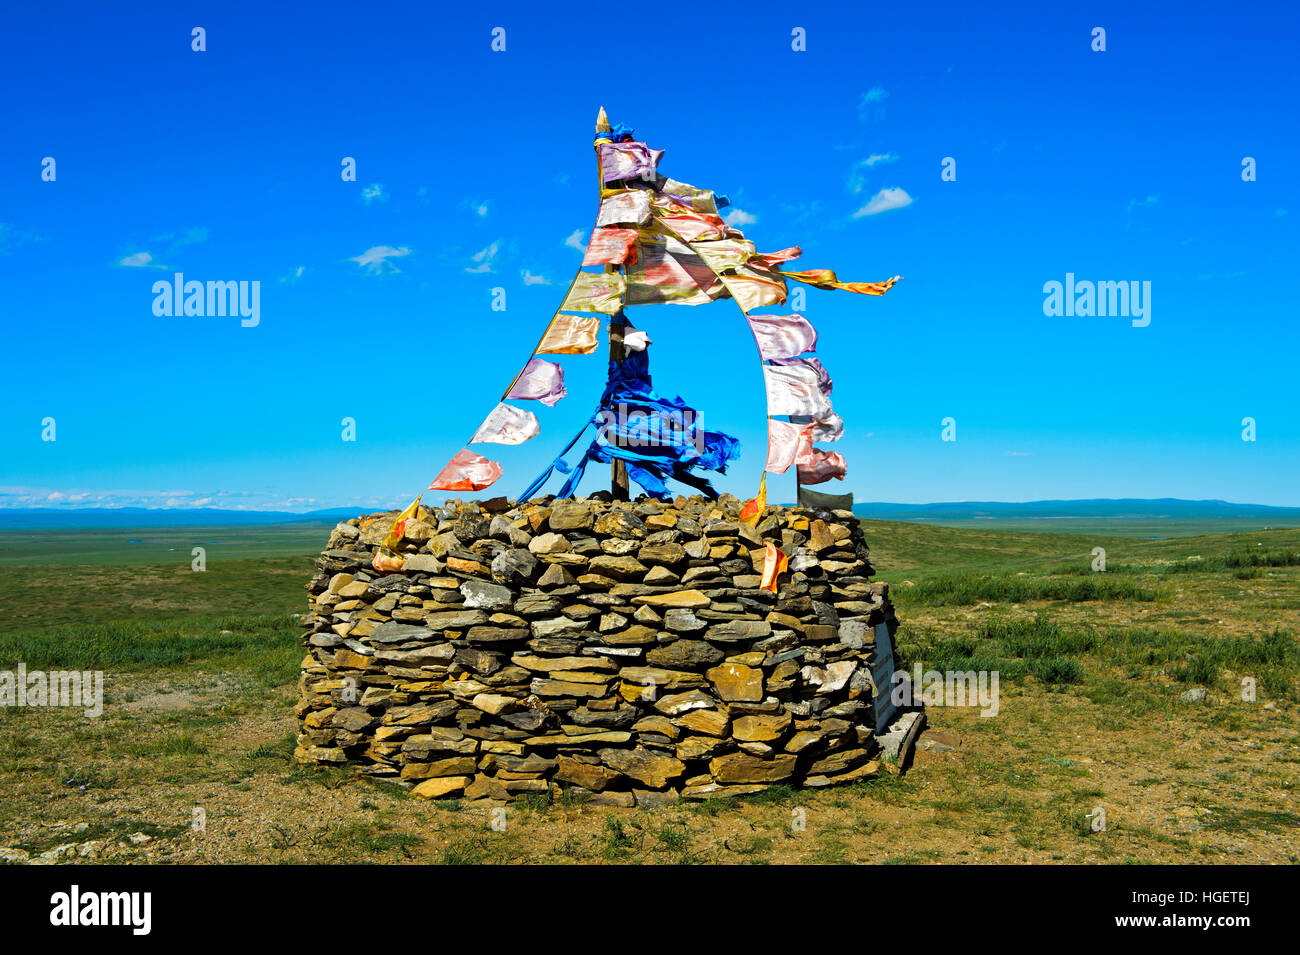 Ovoo, piedra sagrada montón usado lugar de culto en la tradición religiosa de Mongolia, llanura montañosa en Arkhangai Aimag, Mongolia Foto de stock